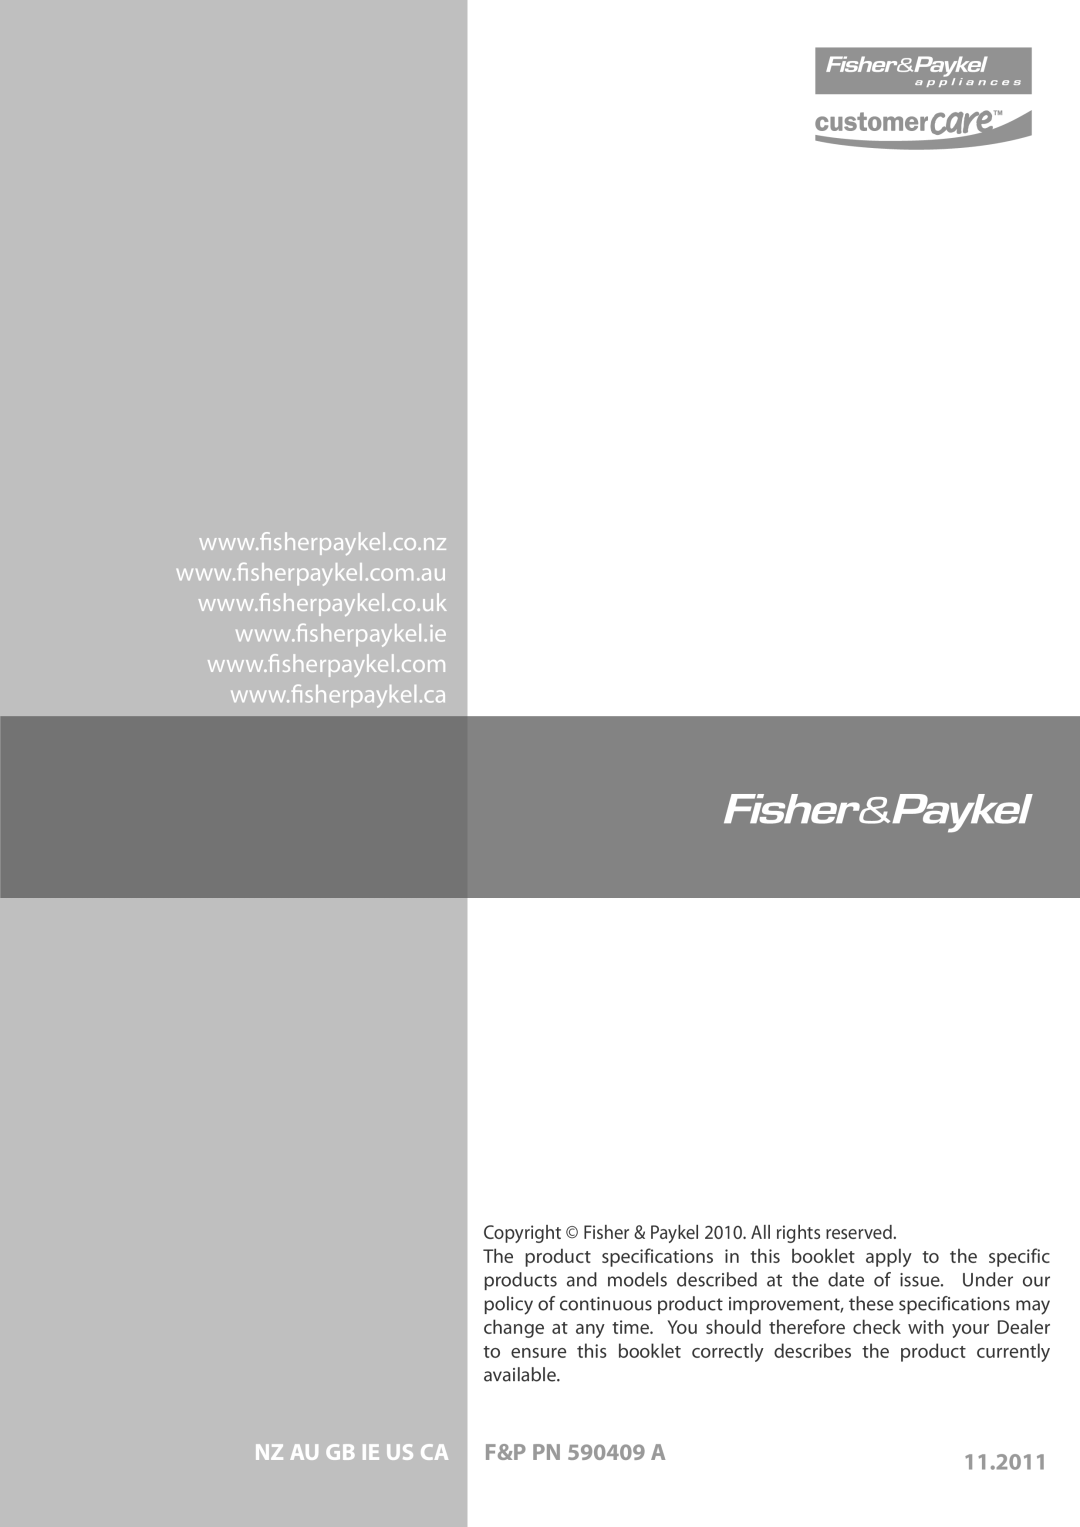 Fisher & Paykel DD607, DD247 service manual NZ AU GB IE US CA F&P PN 590409 A, 11.2011 